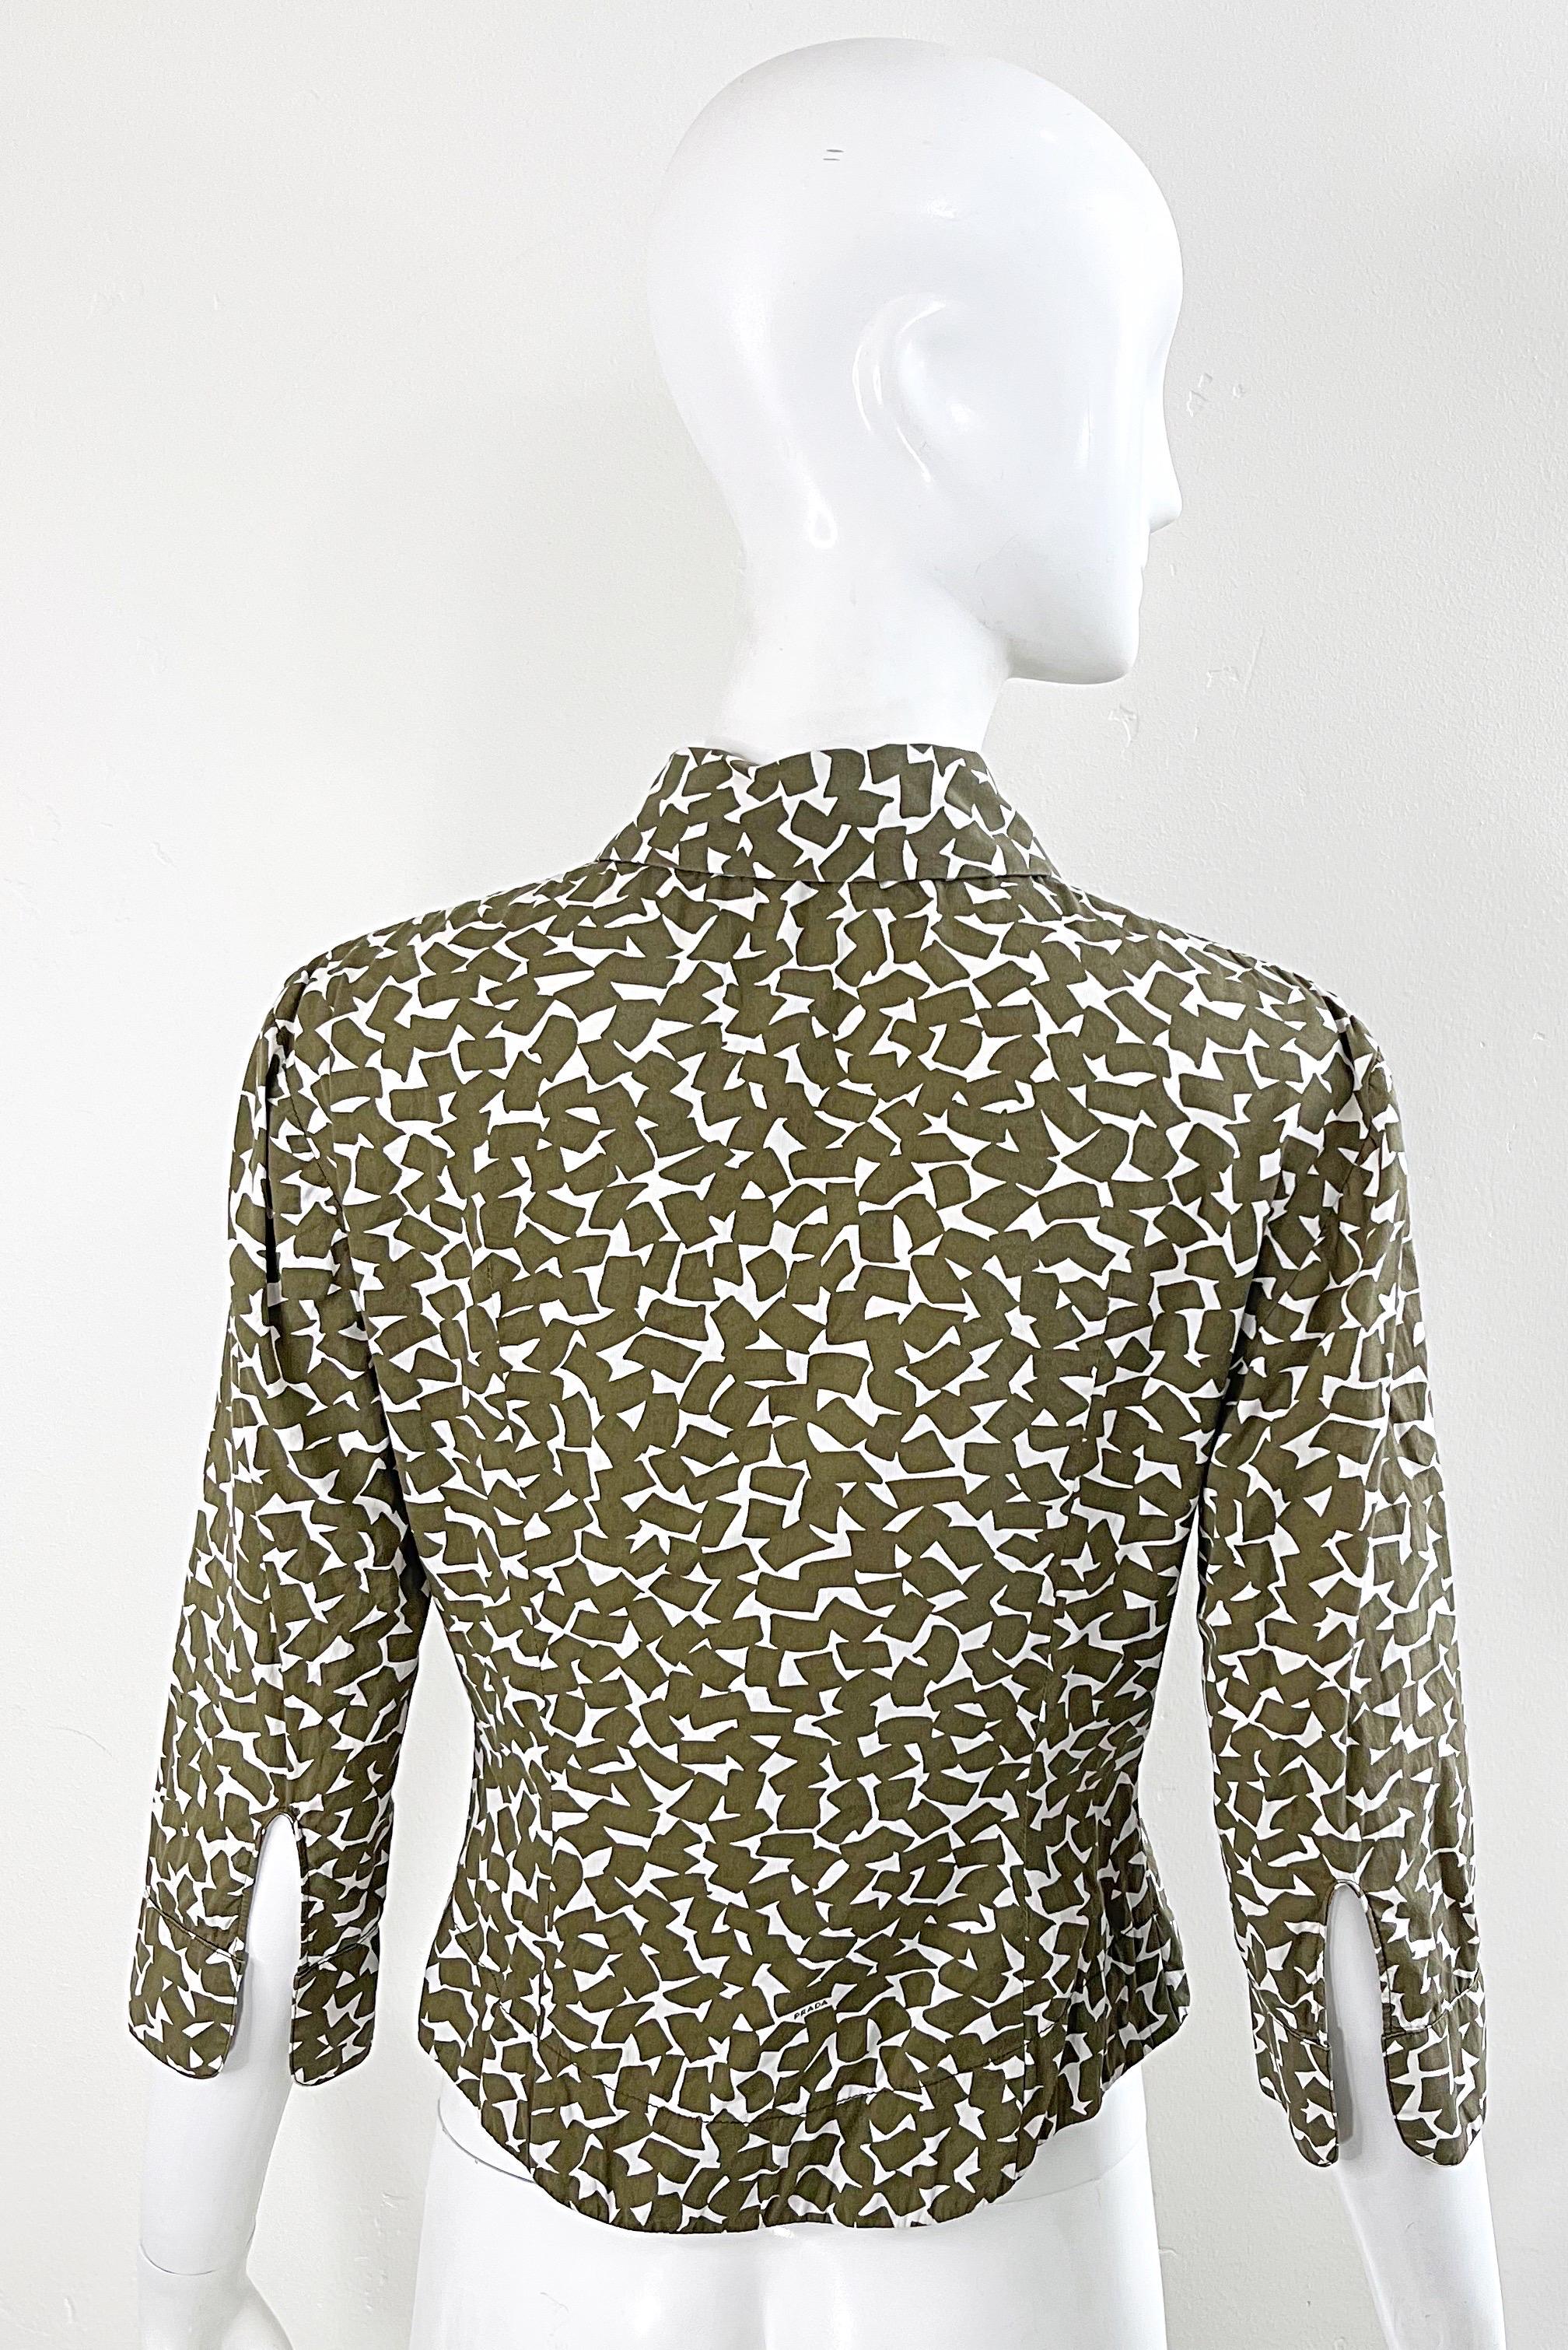 Prada Spring 2002 Size 38 Hunter Green + White Abstract Logo Print Shirt Blouse For Sale 4